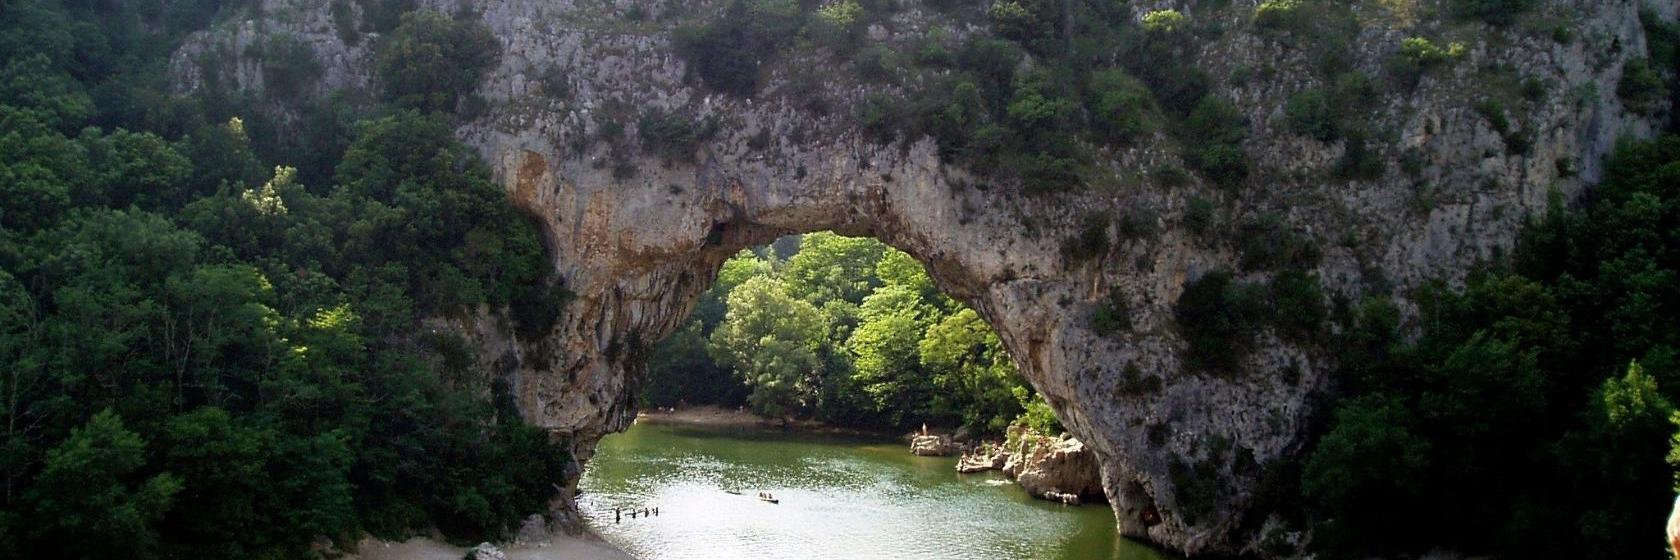 The 10 best hotels near Chauvet Cave in Vallon-Pont-dʼArc, France